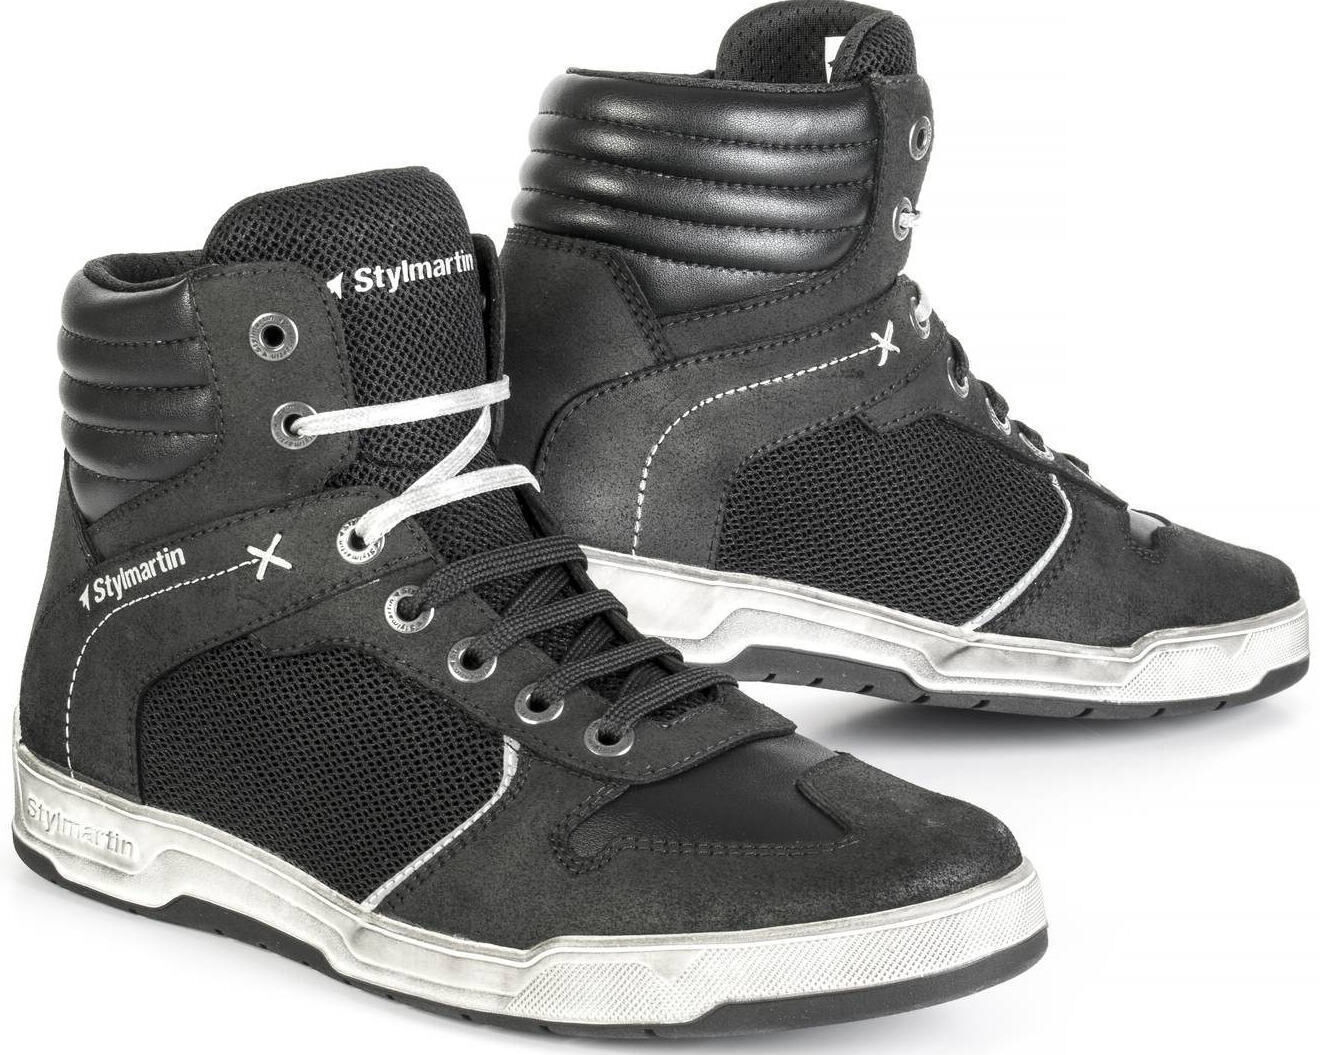 Stylmartin Atom Zapatos de moto - Negro Blanco (42)